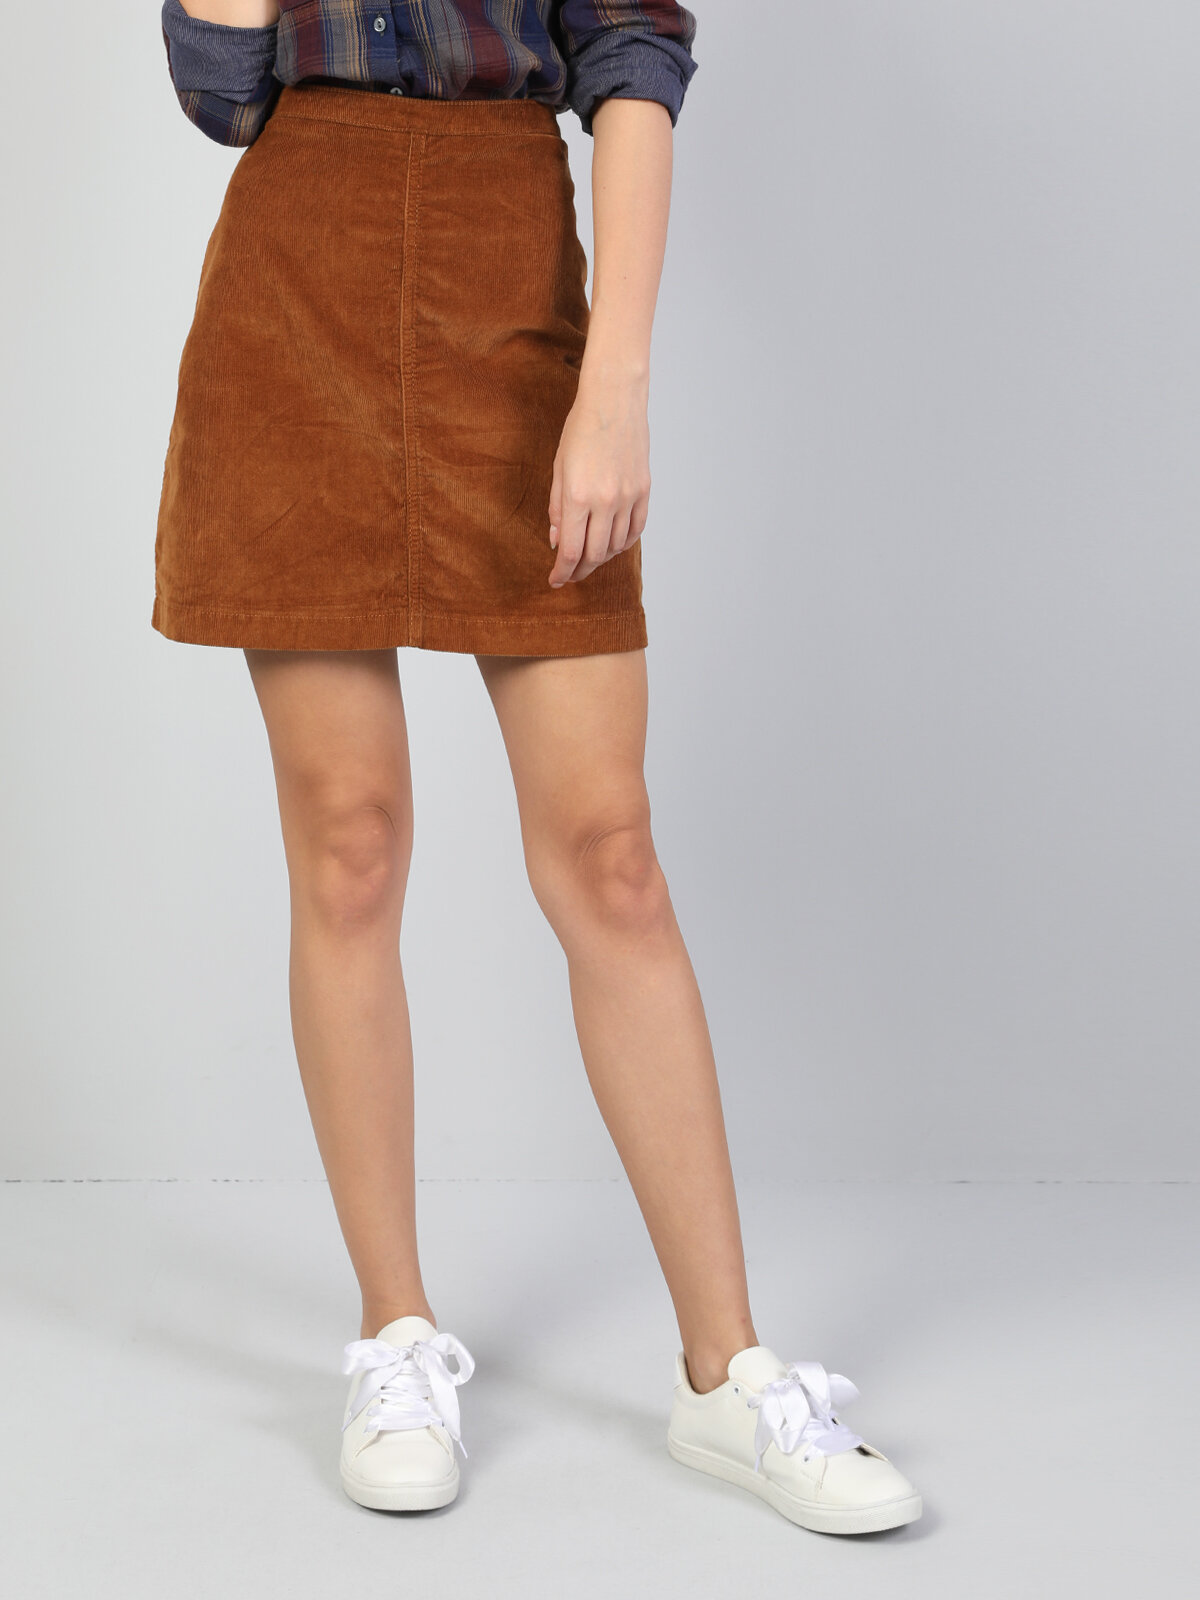 Colins Brown Woman Skirt. 1